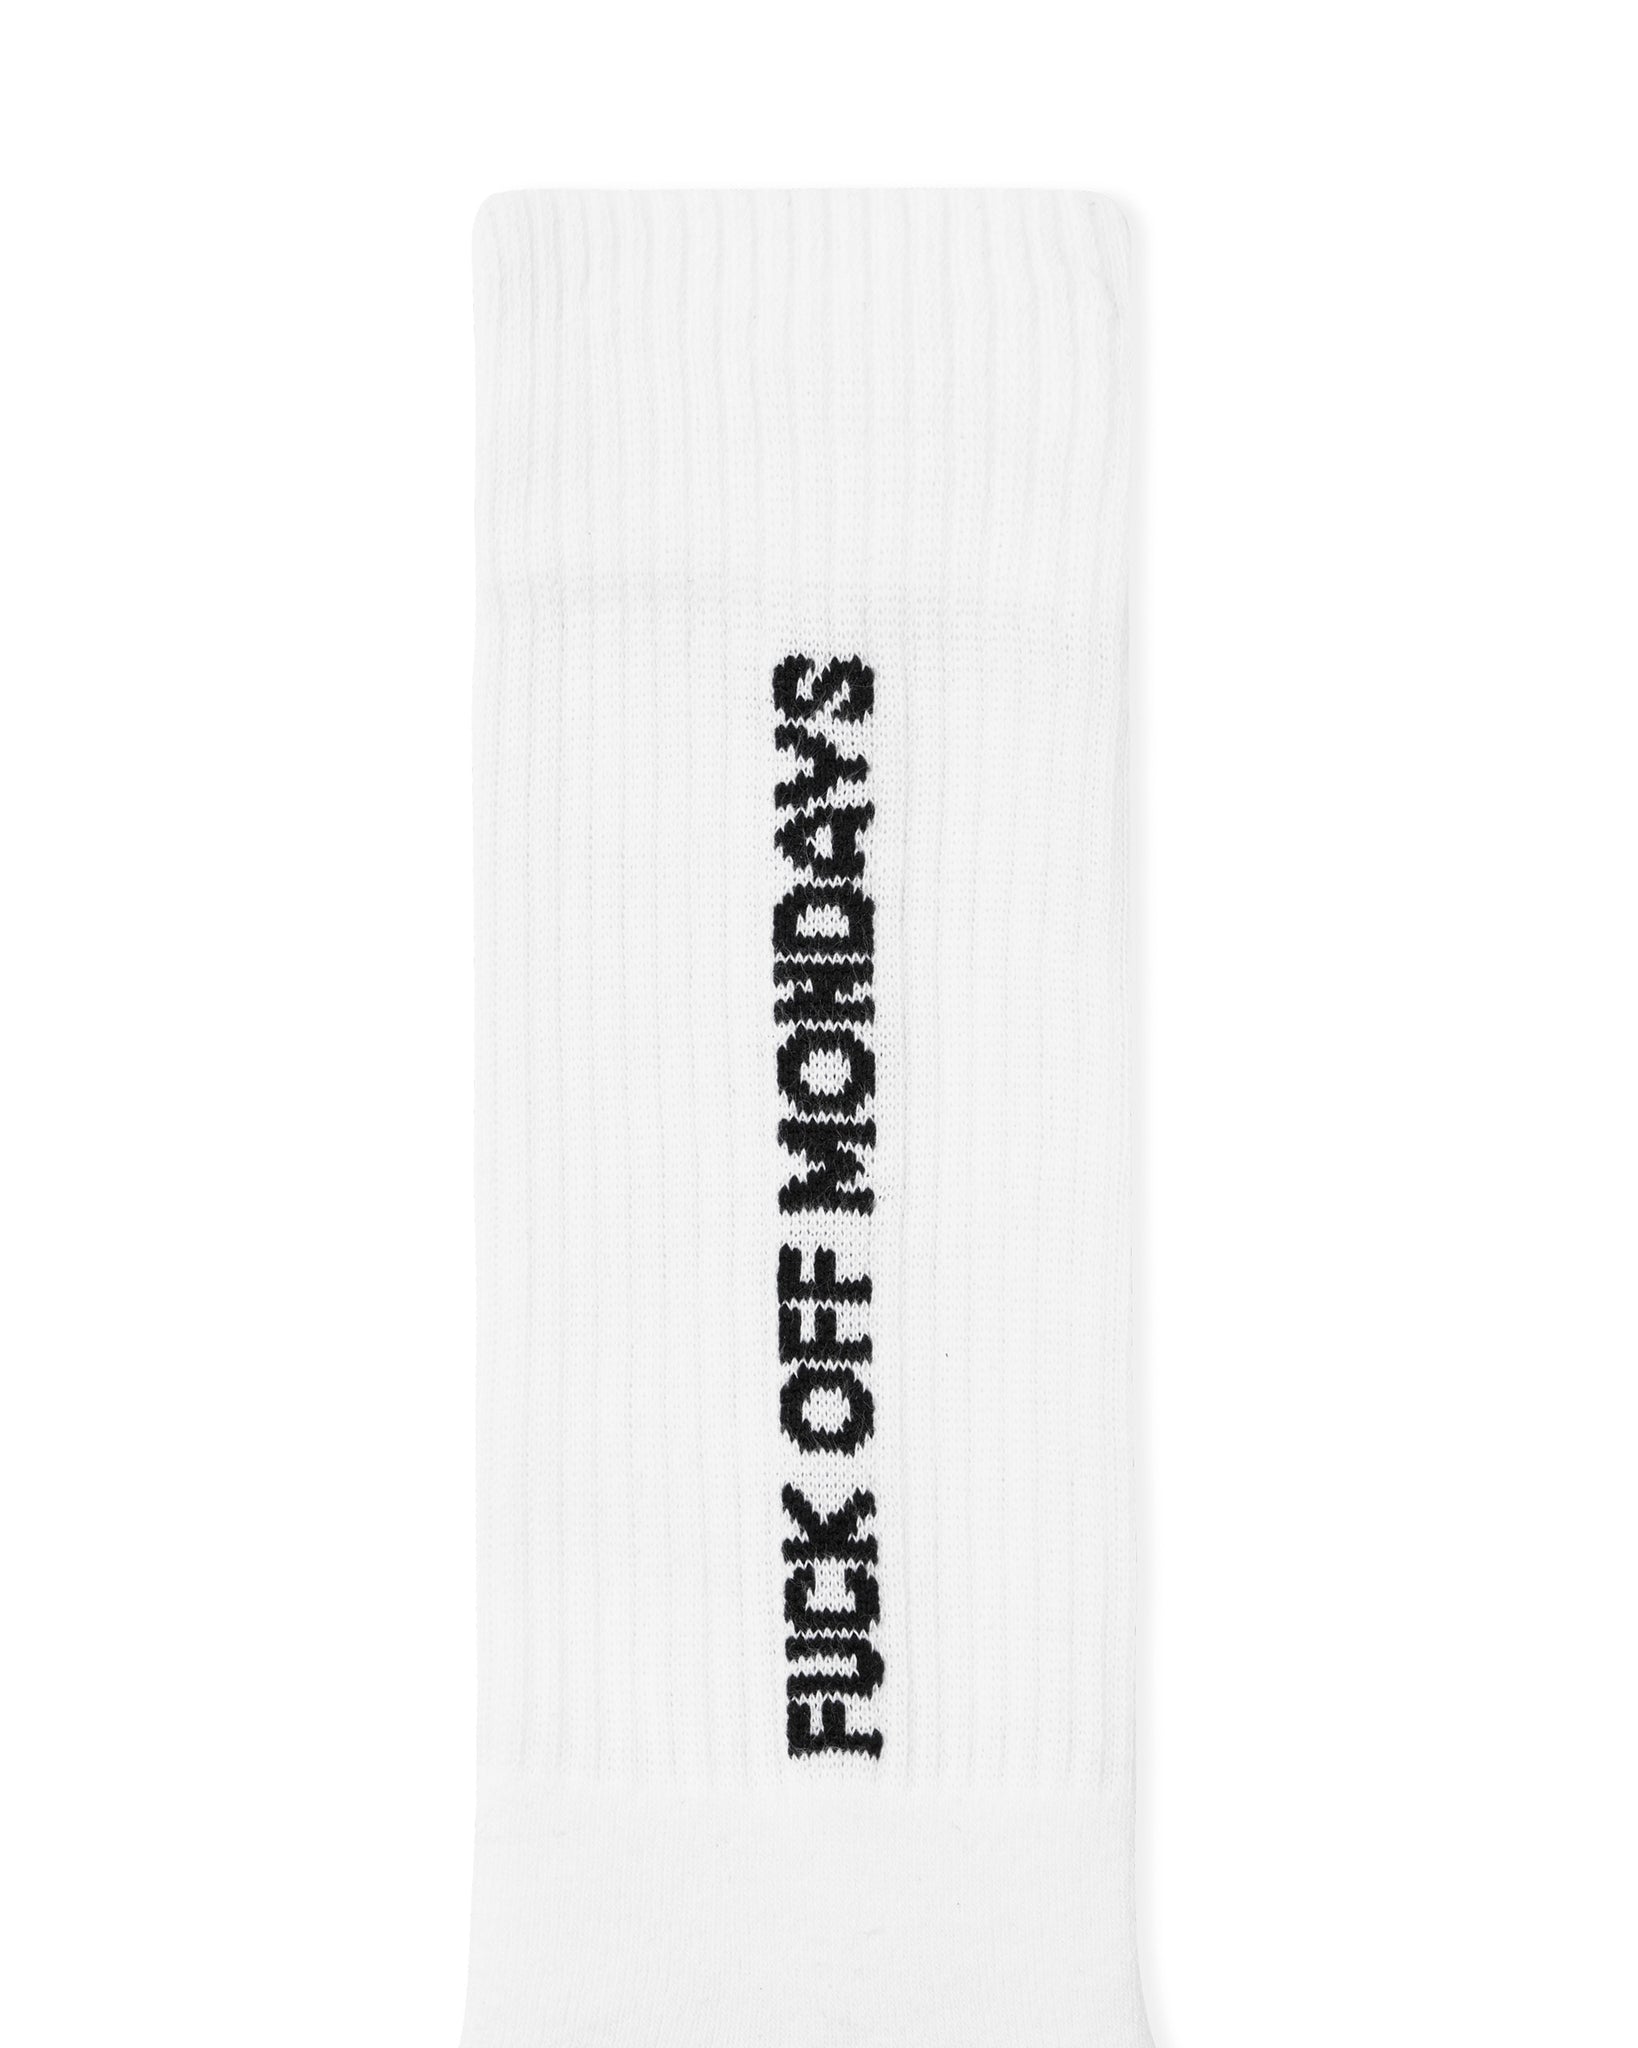 FO Mondays Sports Socks White